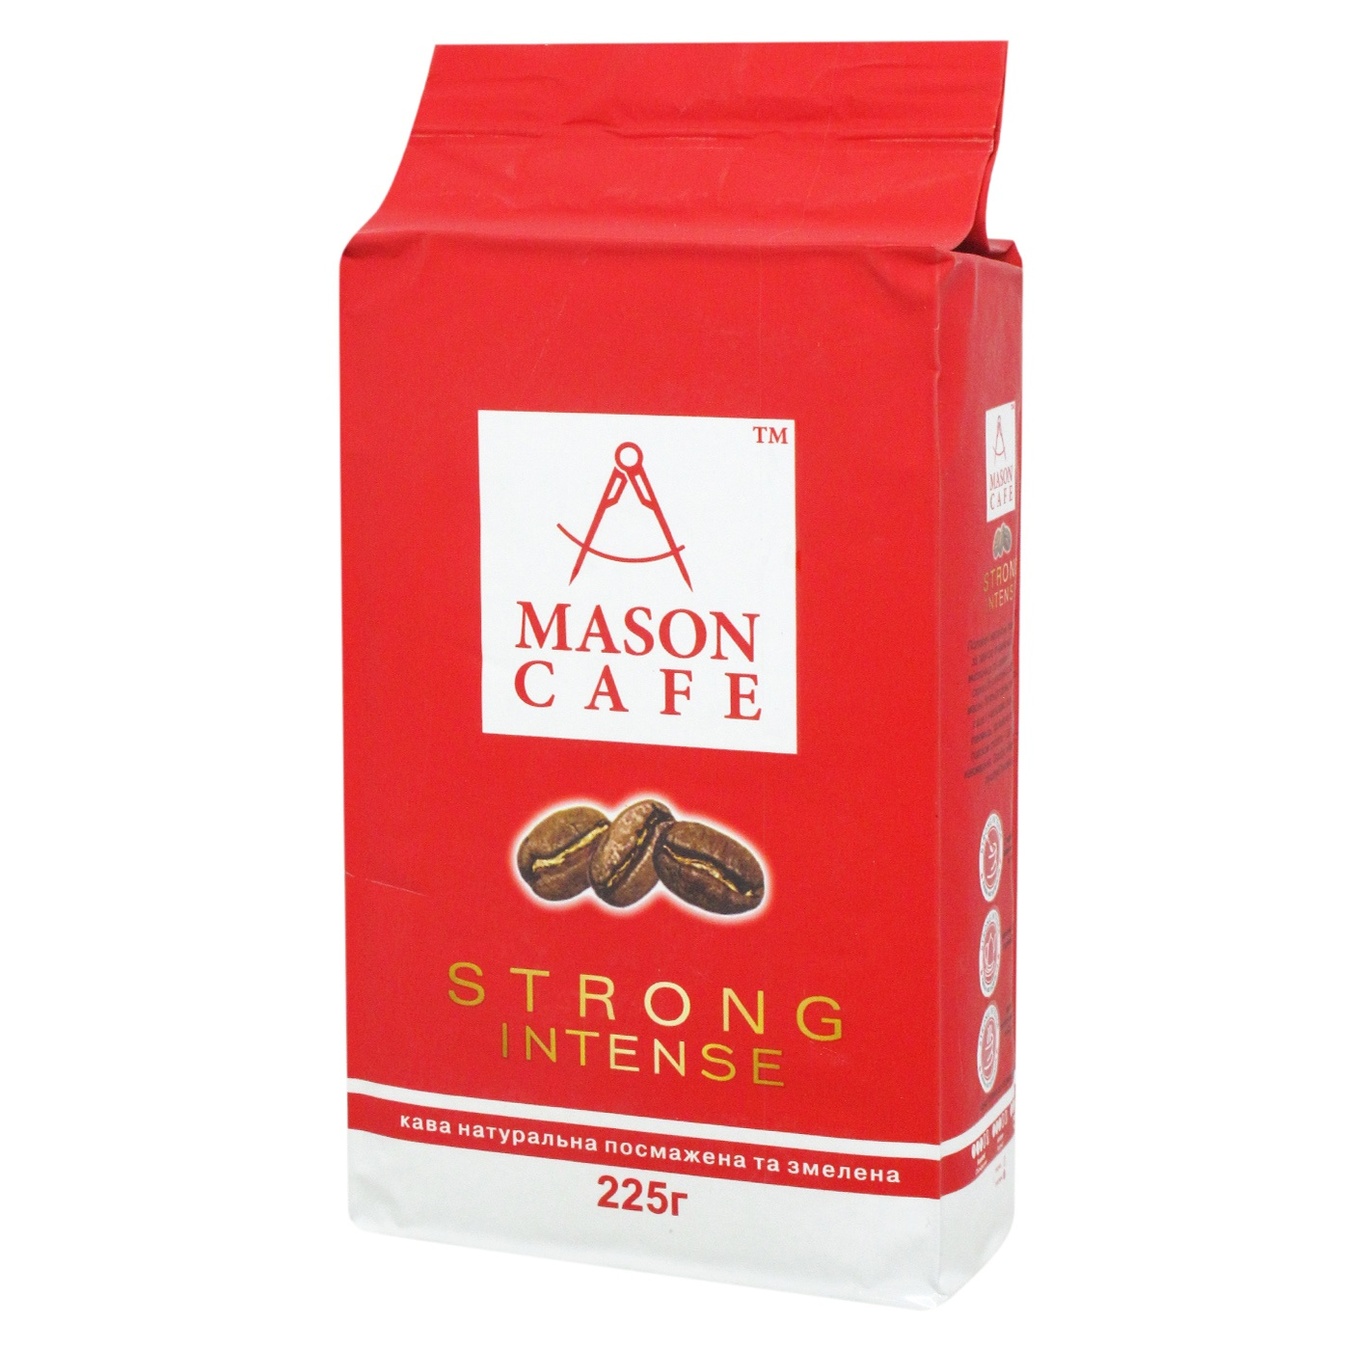 Кофе молотый Strong Intense Mason cafe пакет 225г